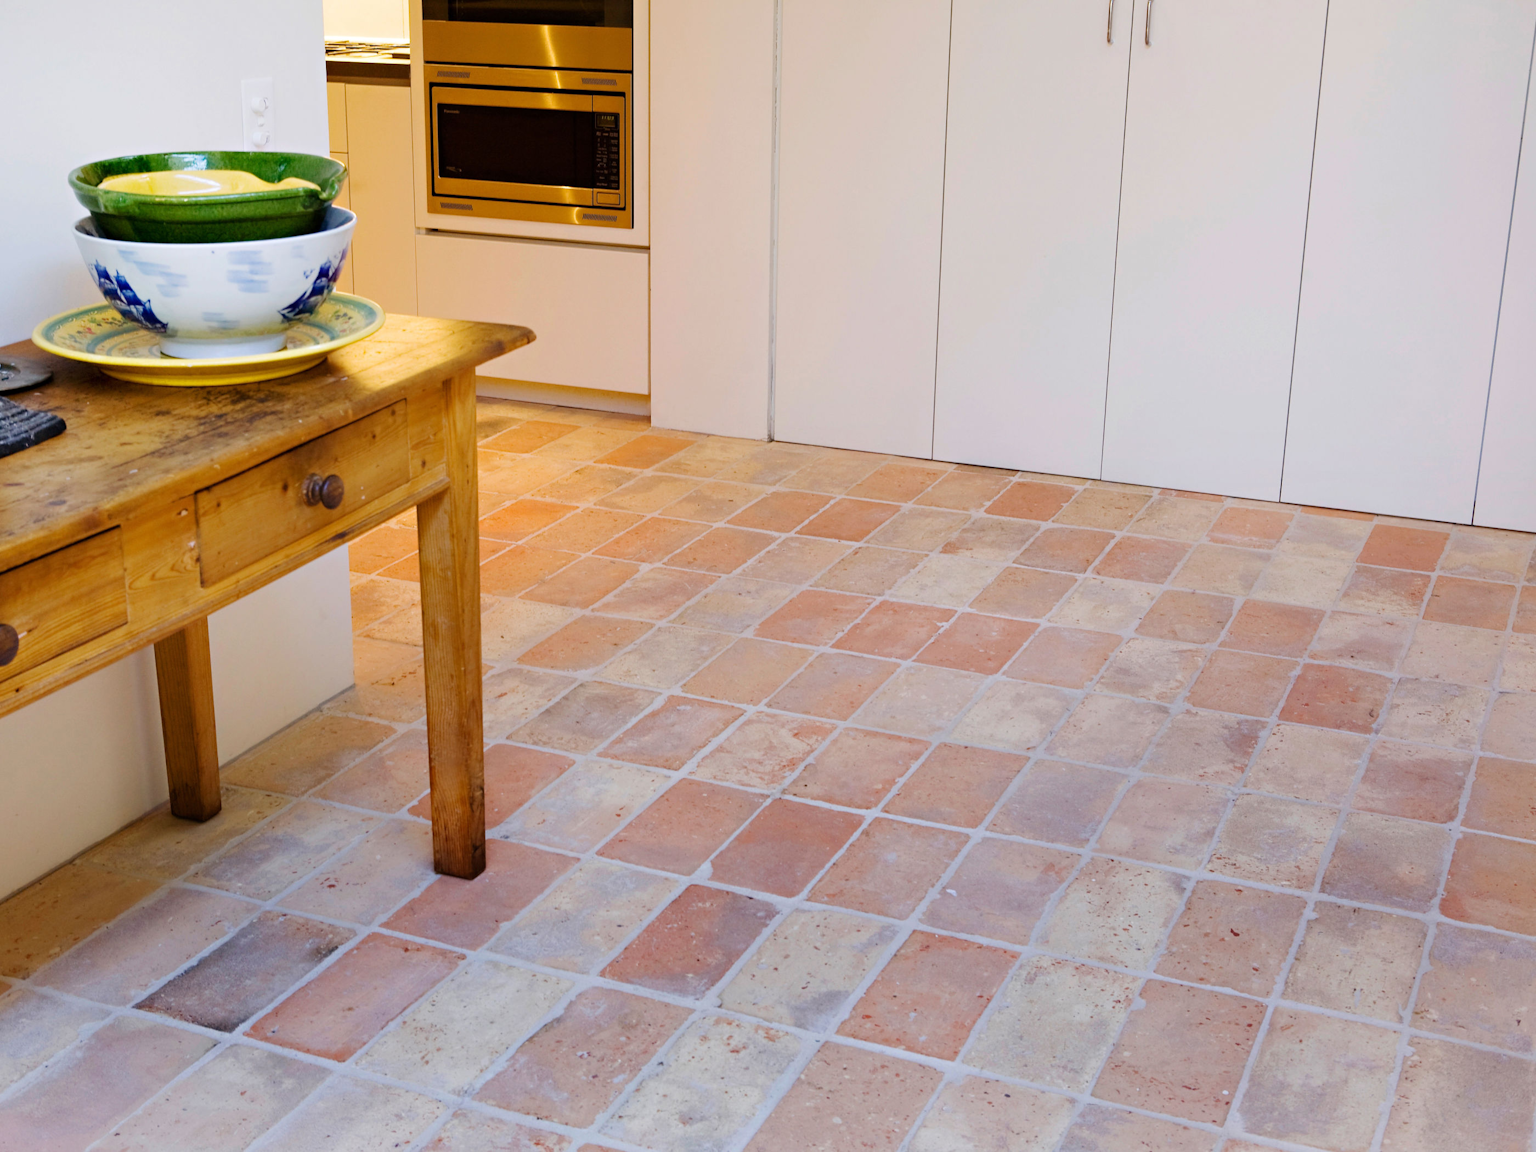 Antico Luce terracotta tiles used internally through kitchen area